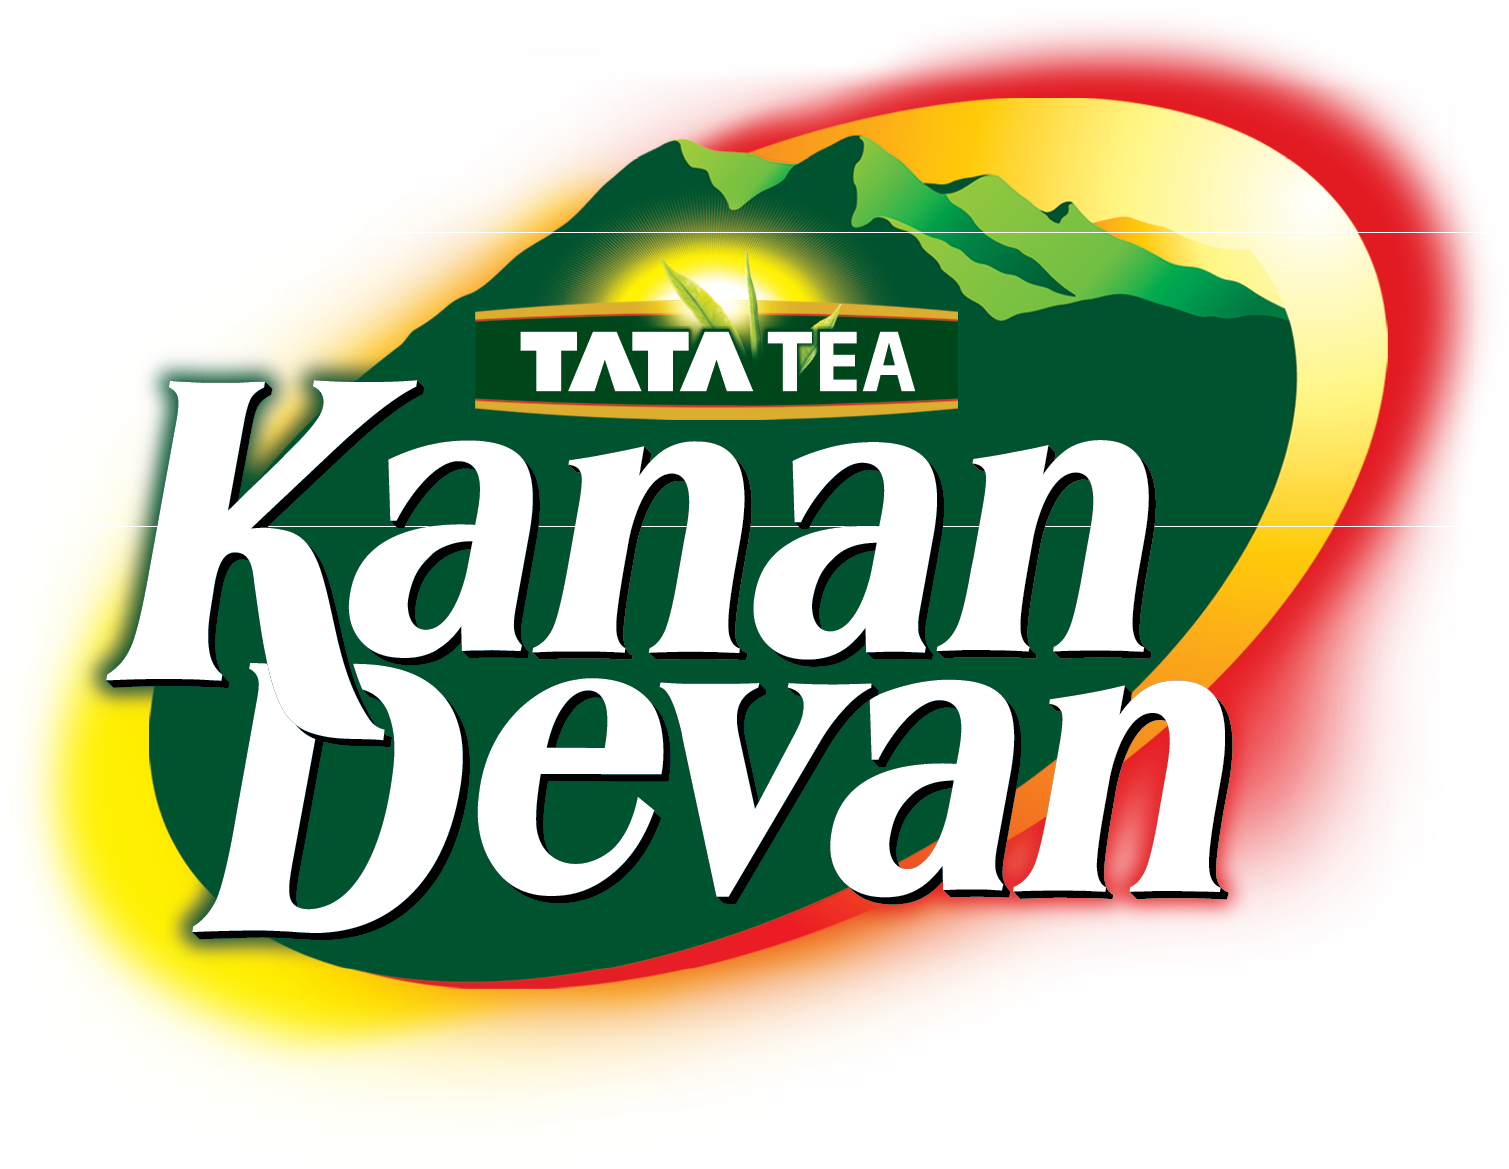 Tata Tea Advertising Projects :: Photos, videos, logos, illustrations and  branding :: Behance